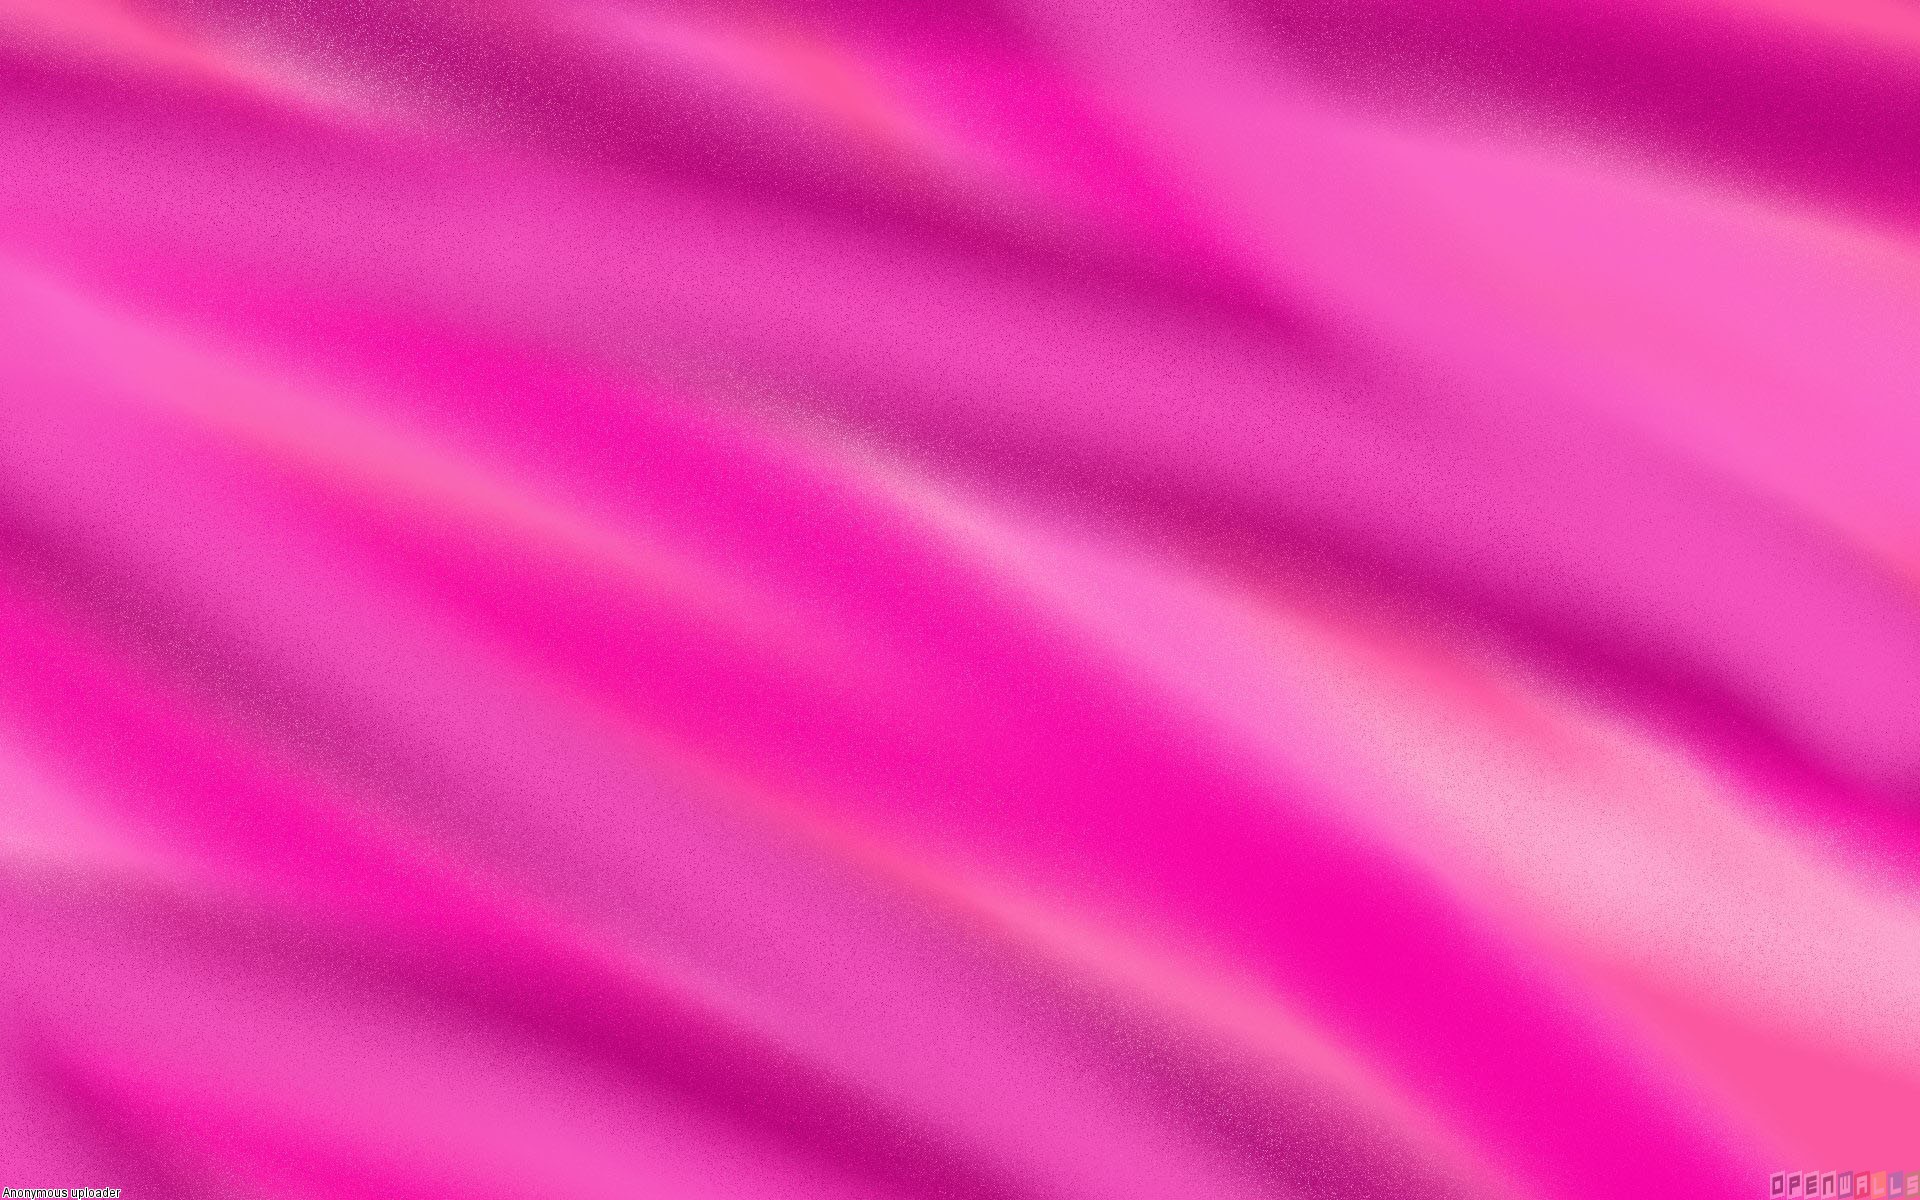 Pink Background wallpaper   342359 1920x1200